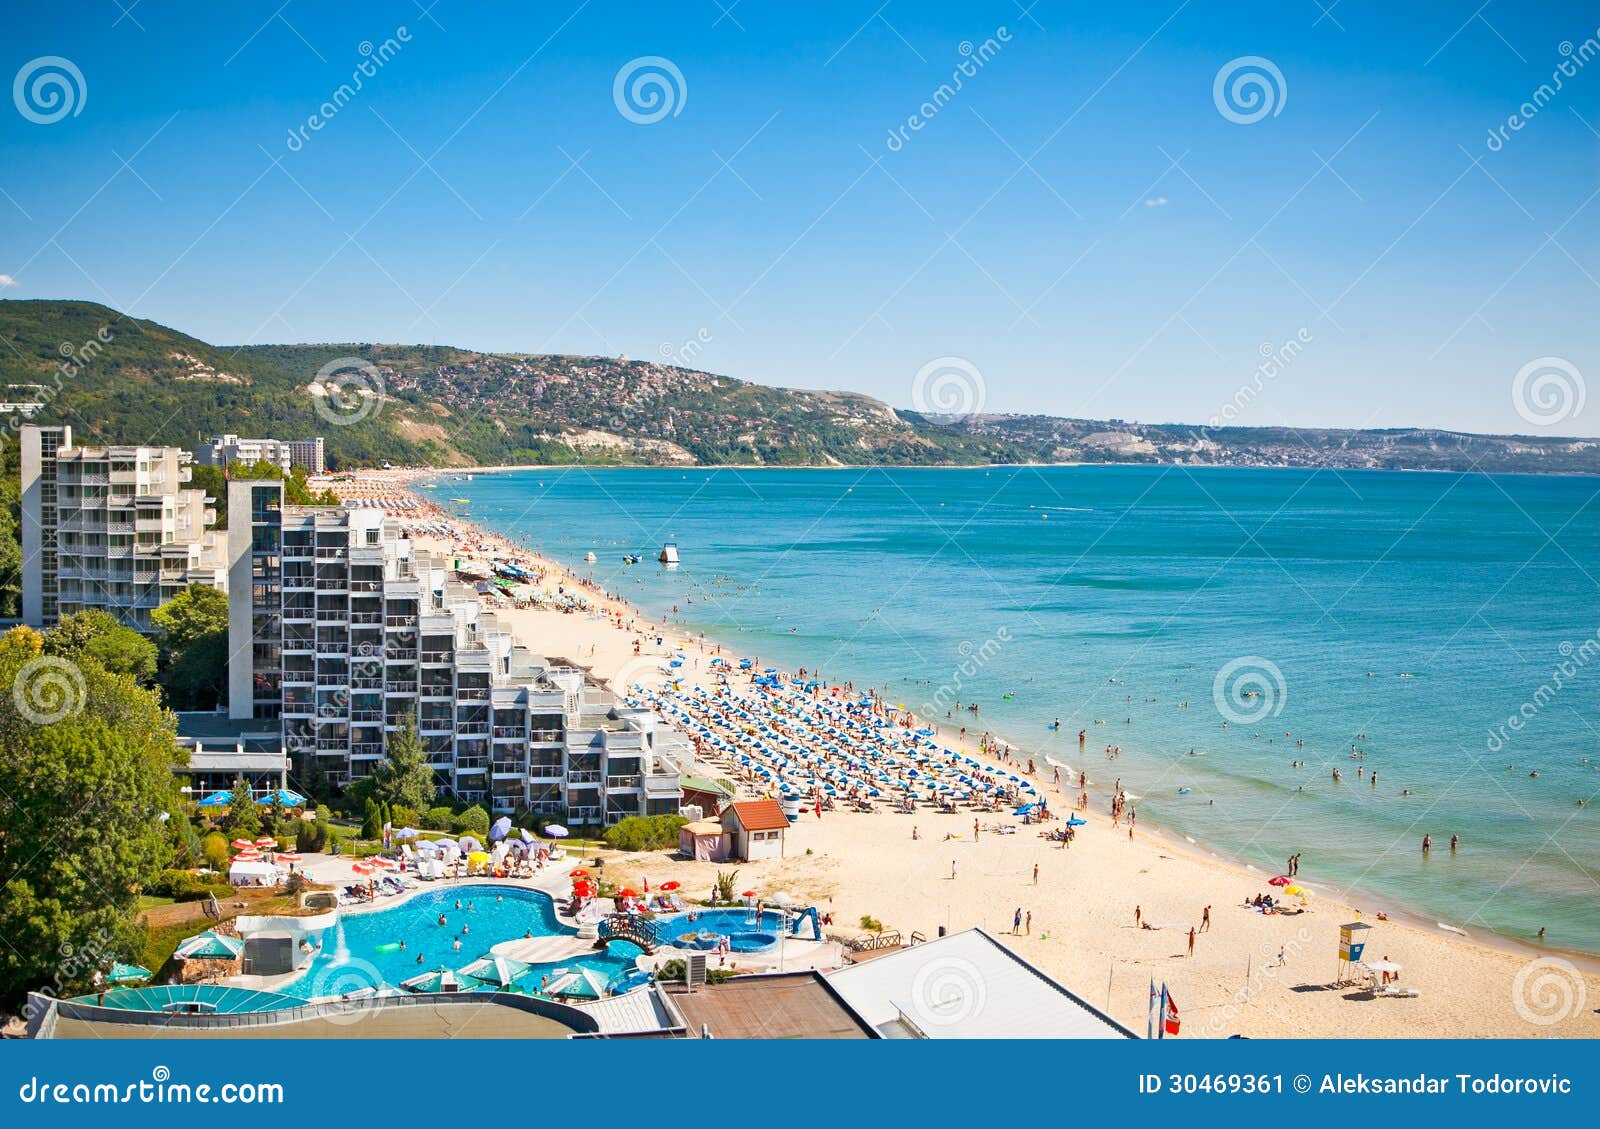 panoramic view of golden sands beach in bulgaria.